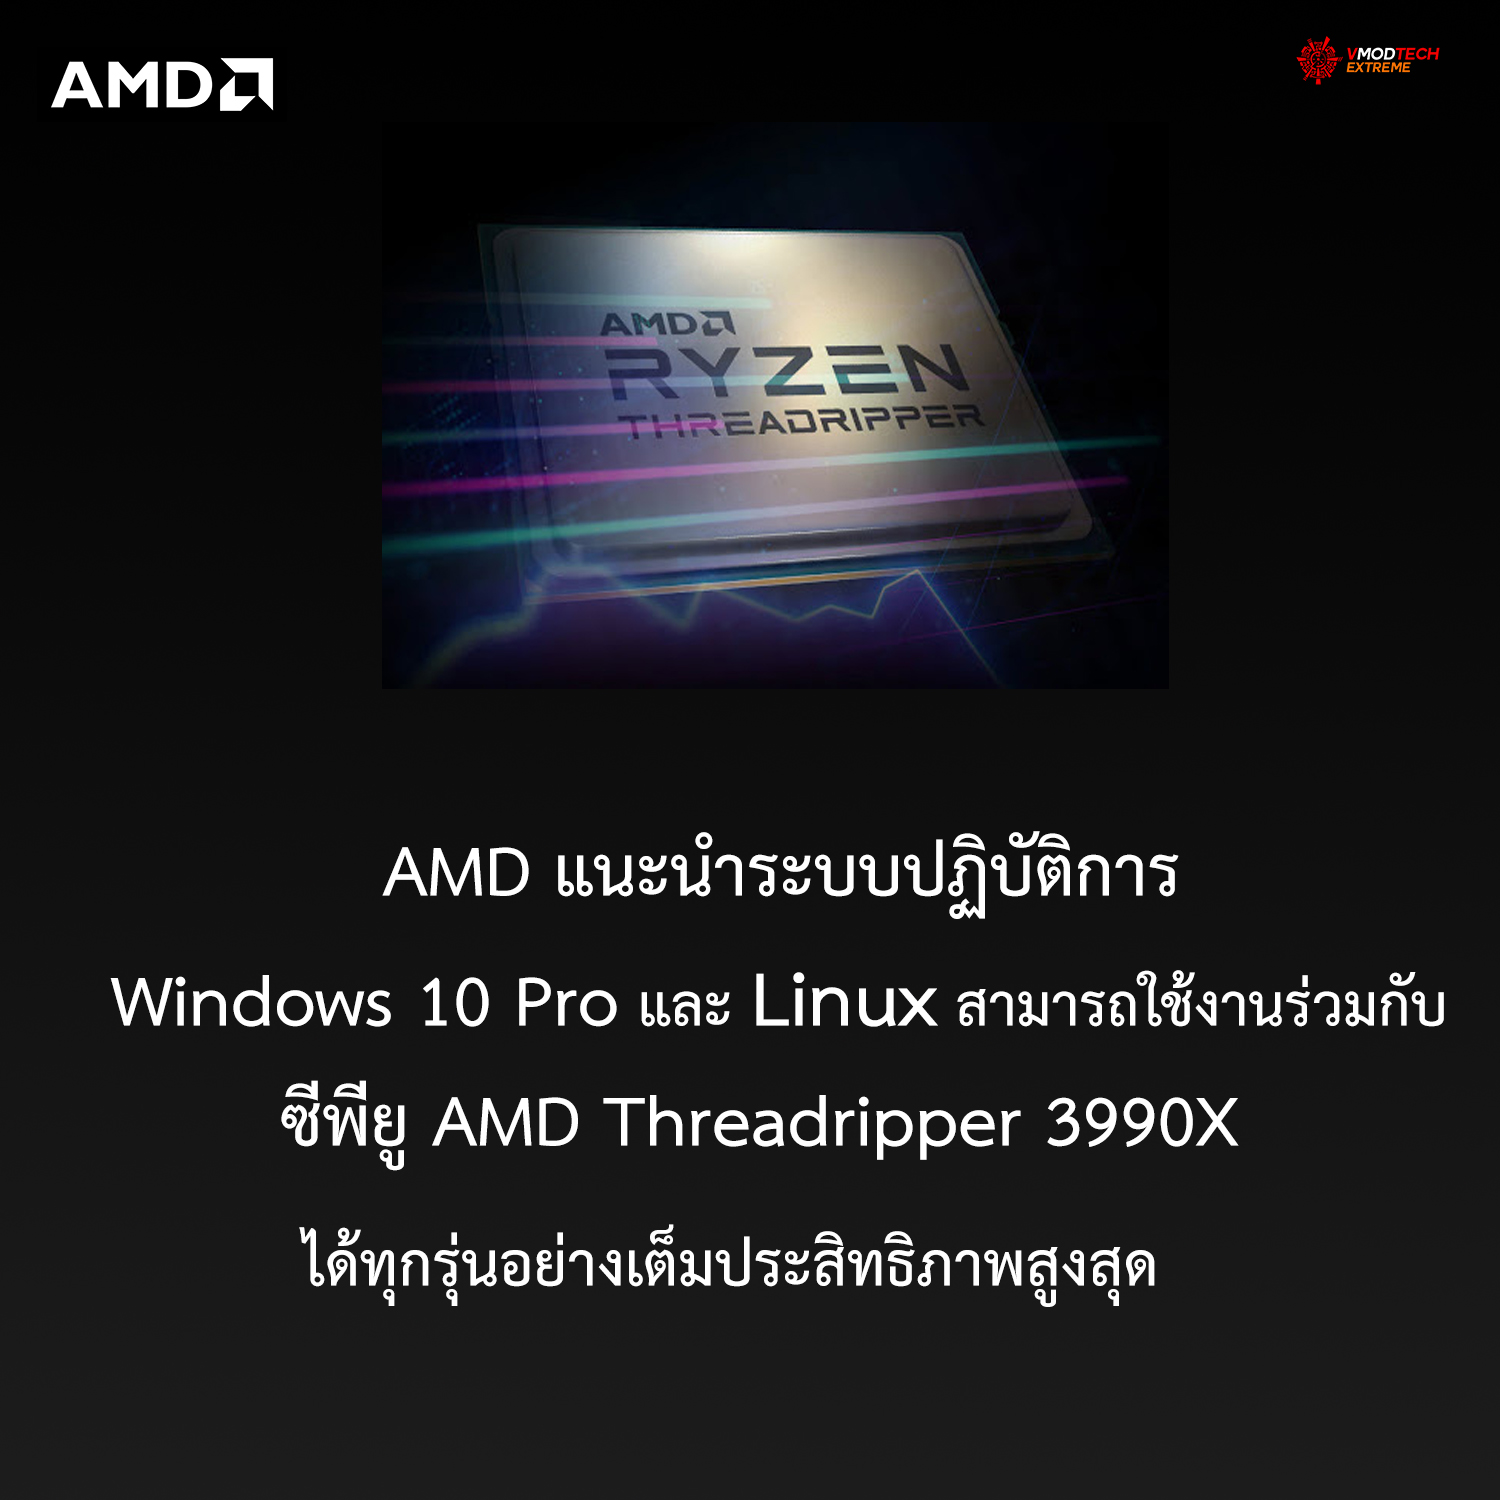 os win pro linux 3990x1 AMD แนะนำ Windows 10 Pro และ Linux ในการใช้งานร่วมกับซีพียู AMD Threadripper 3990X เพื่อประสิทธิภาพสูงสุด   